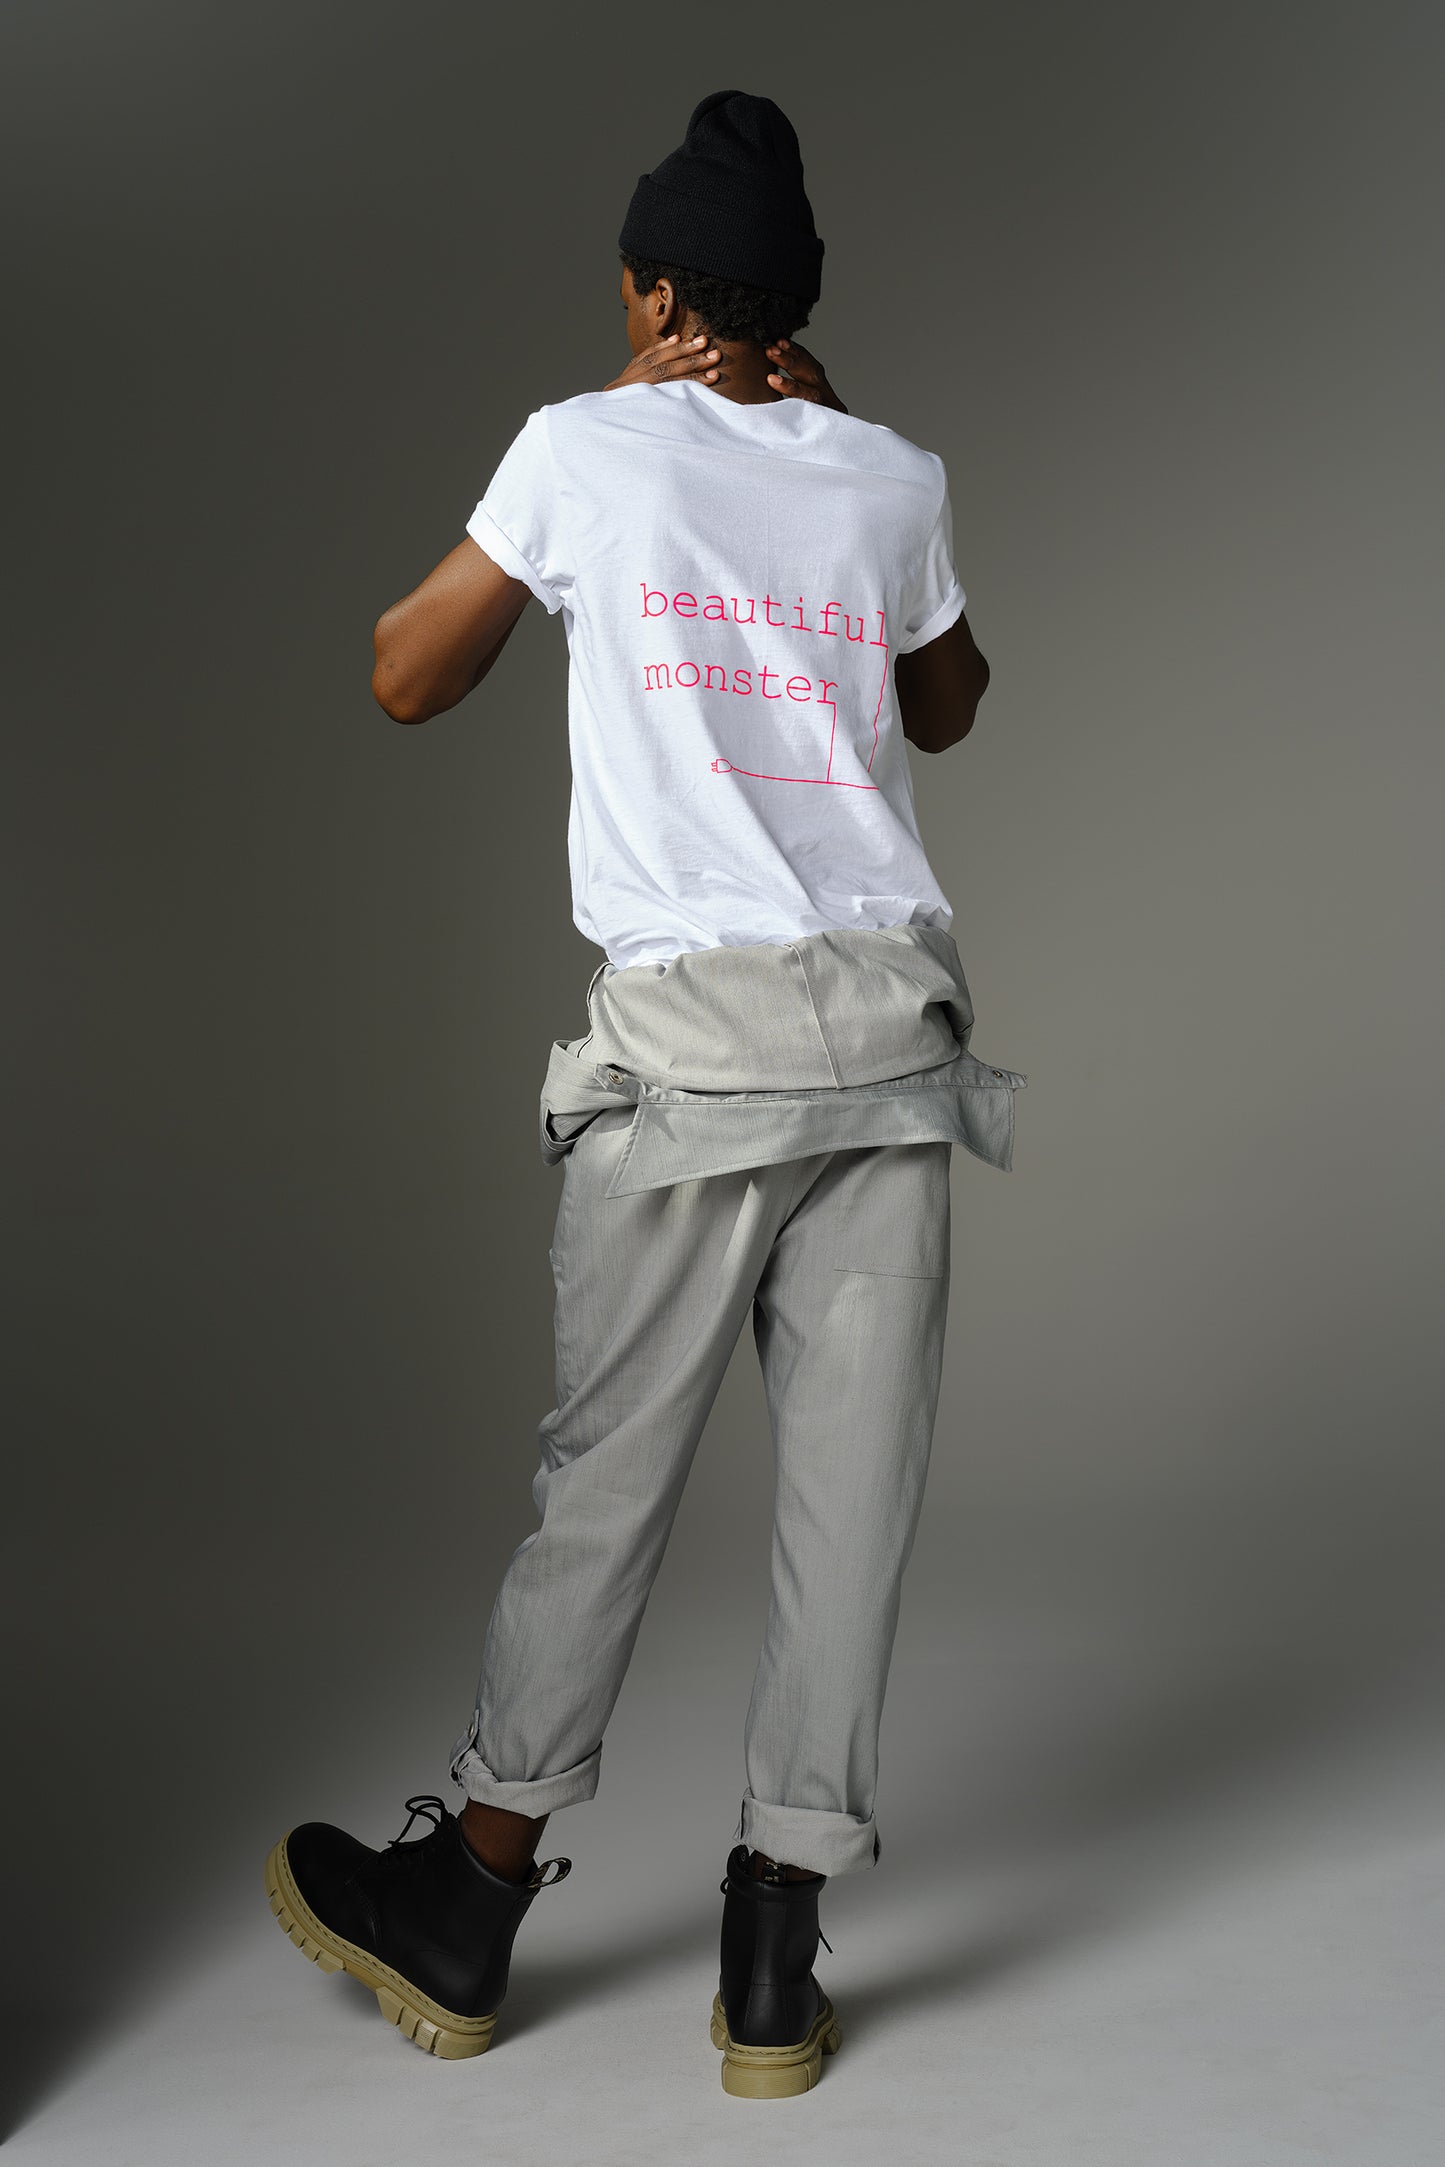 I AM A BEAUTIFUL MONSTER T-Shirt in Fuchsia Print (WOMEN'S SIZES)